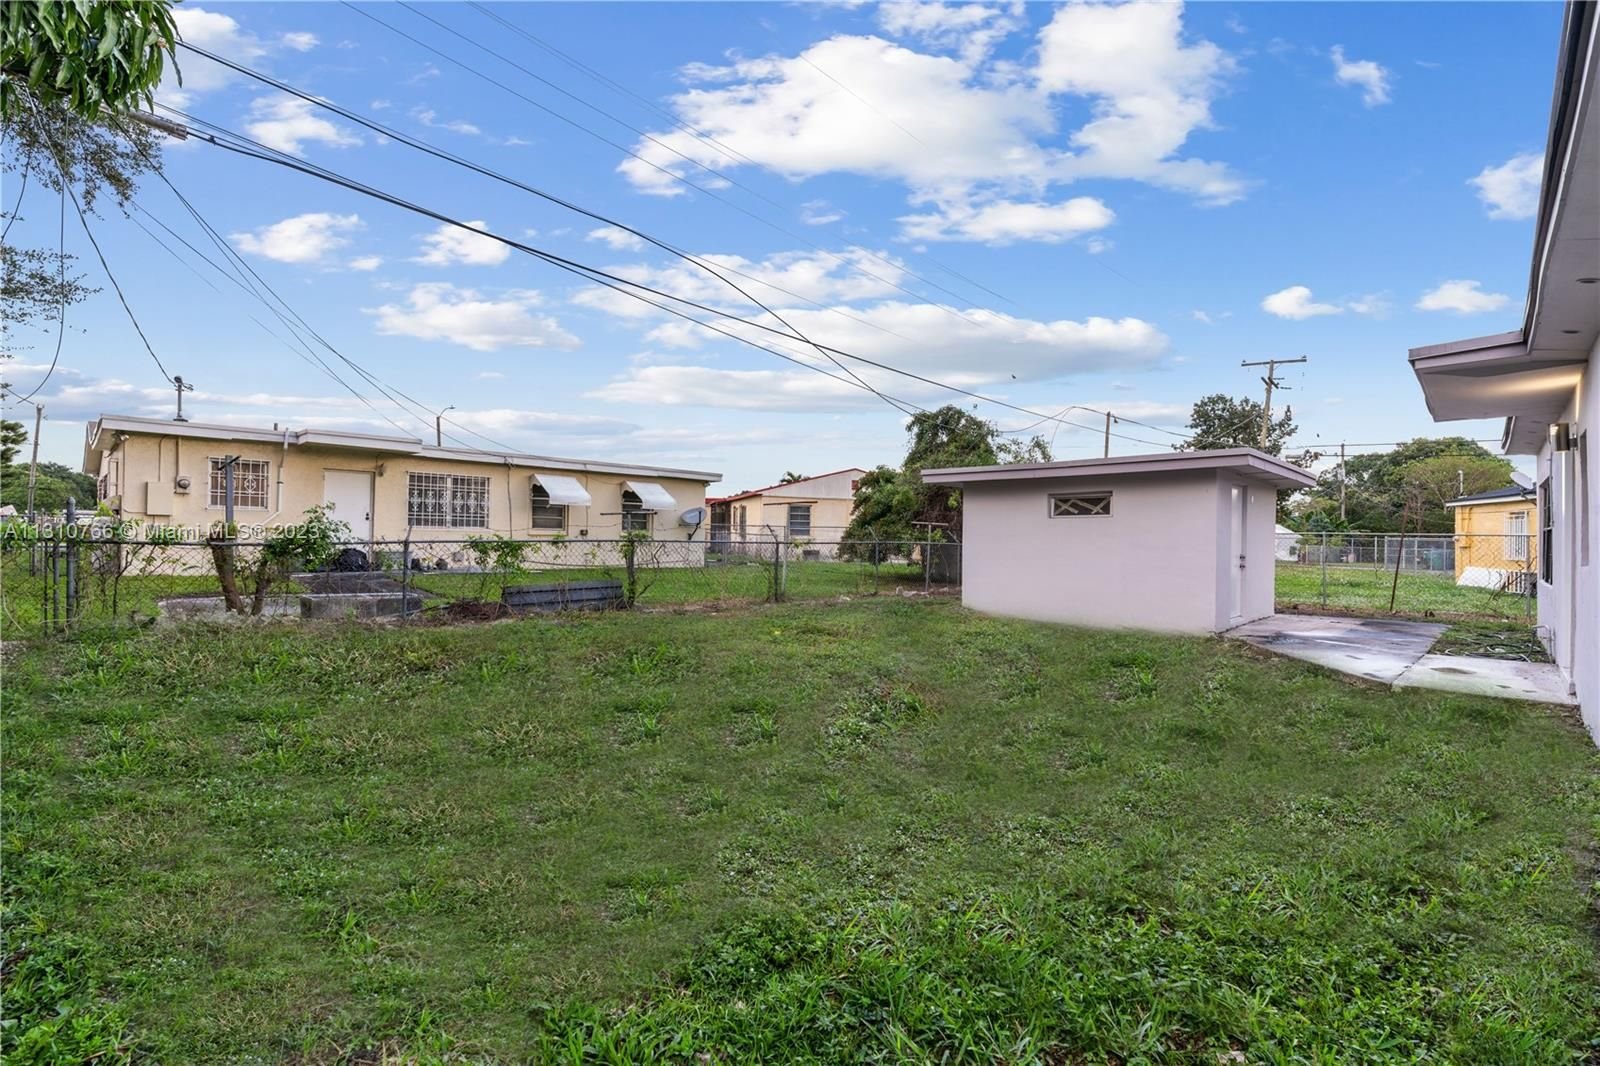 Real estate property located at 2511 154th St, Miami-Dade County, Miami Gardens, FL